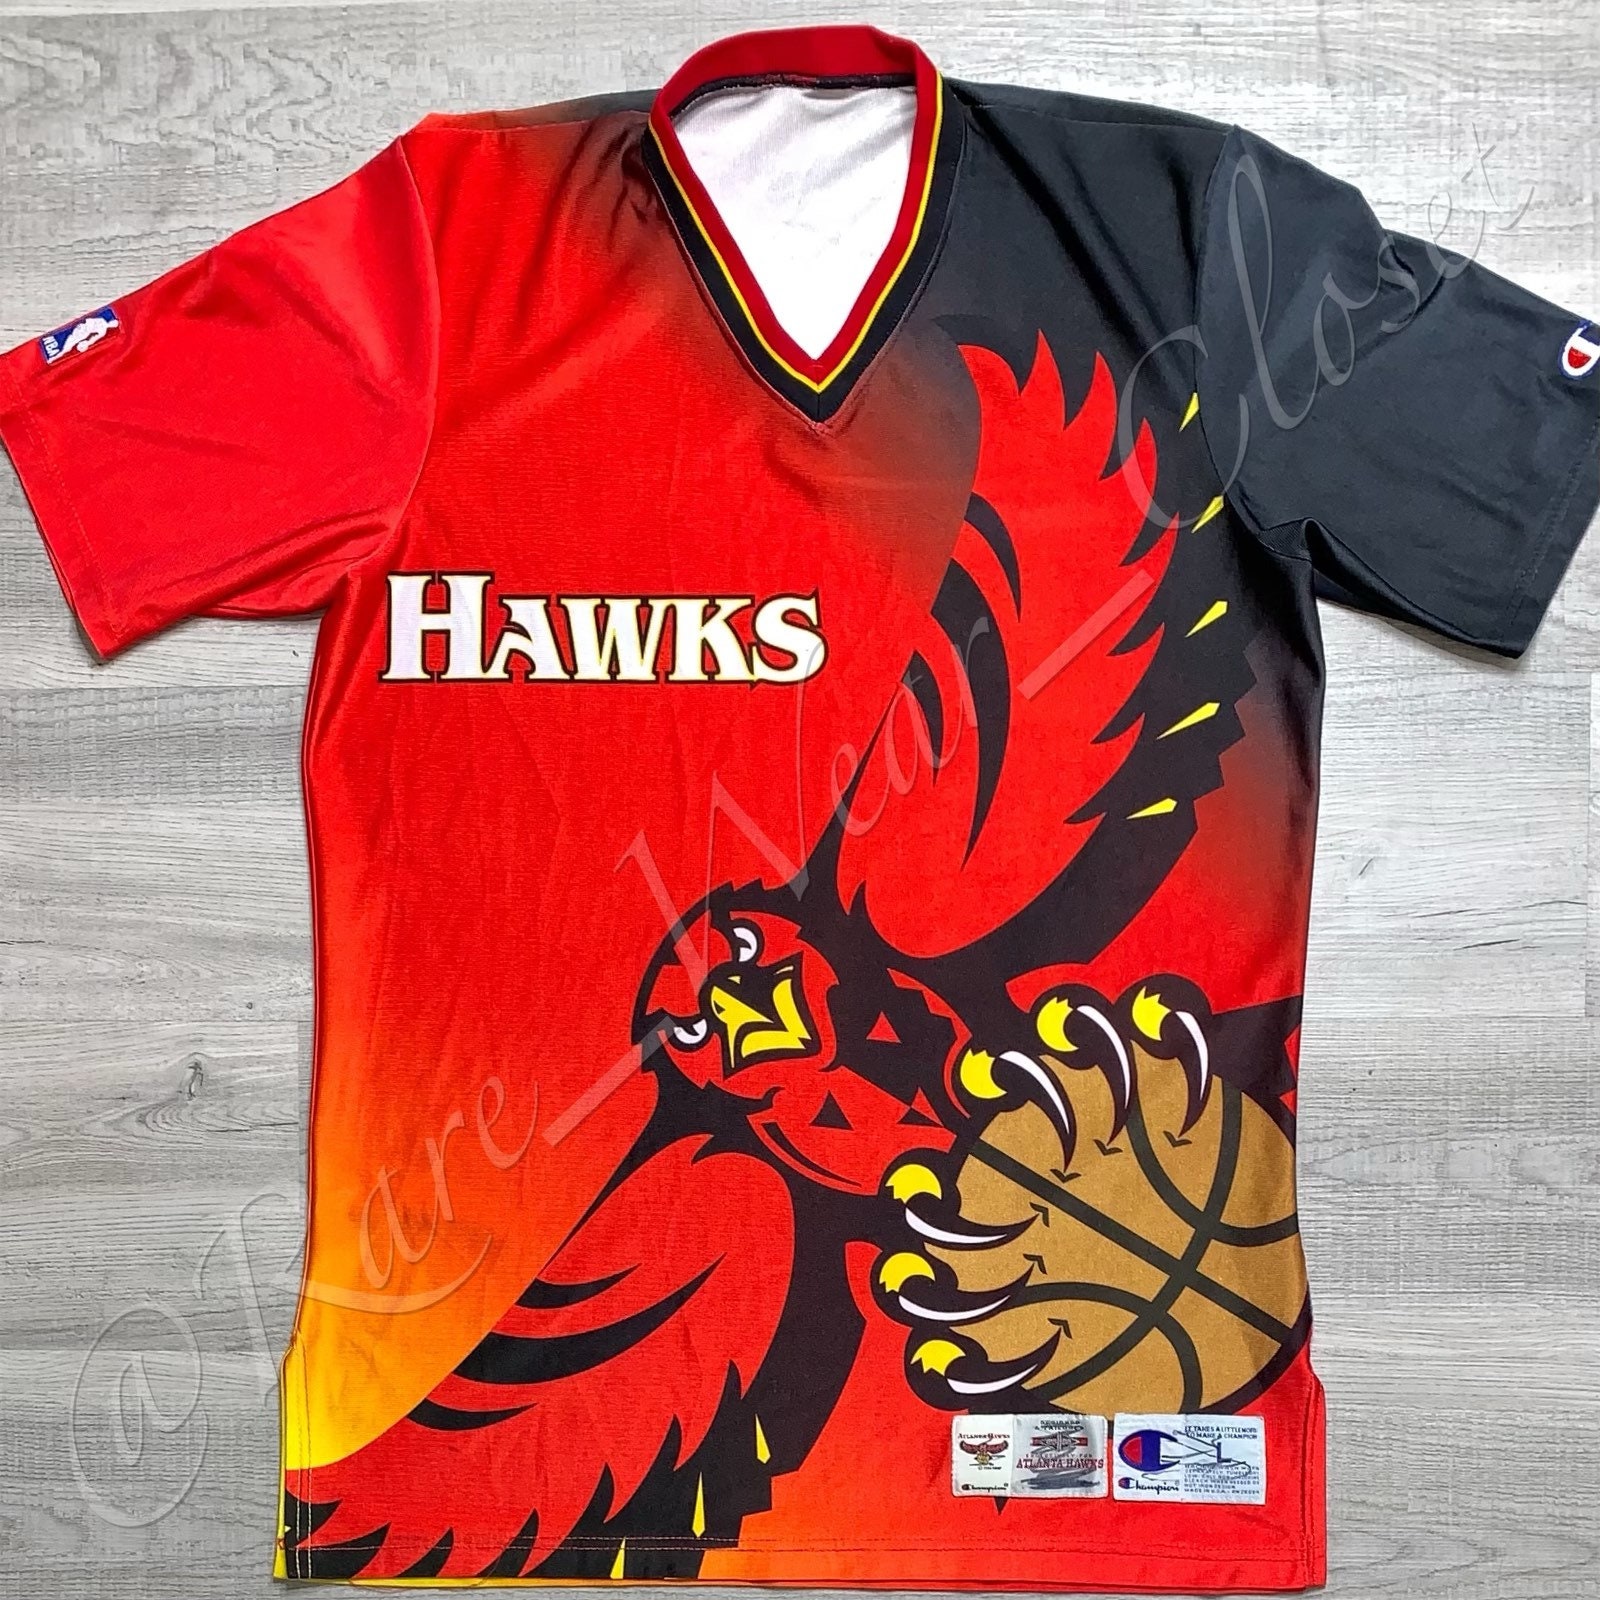 Hawks Throwback Jersey Concept : r/AtlantaHawks